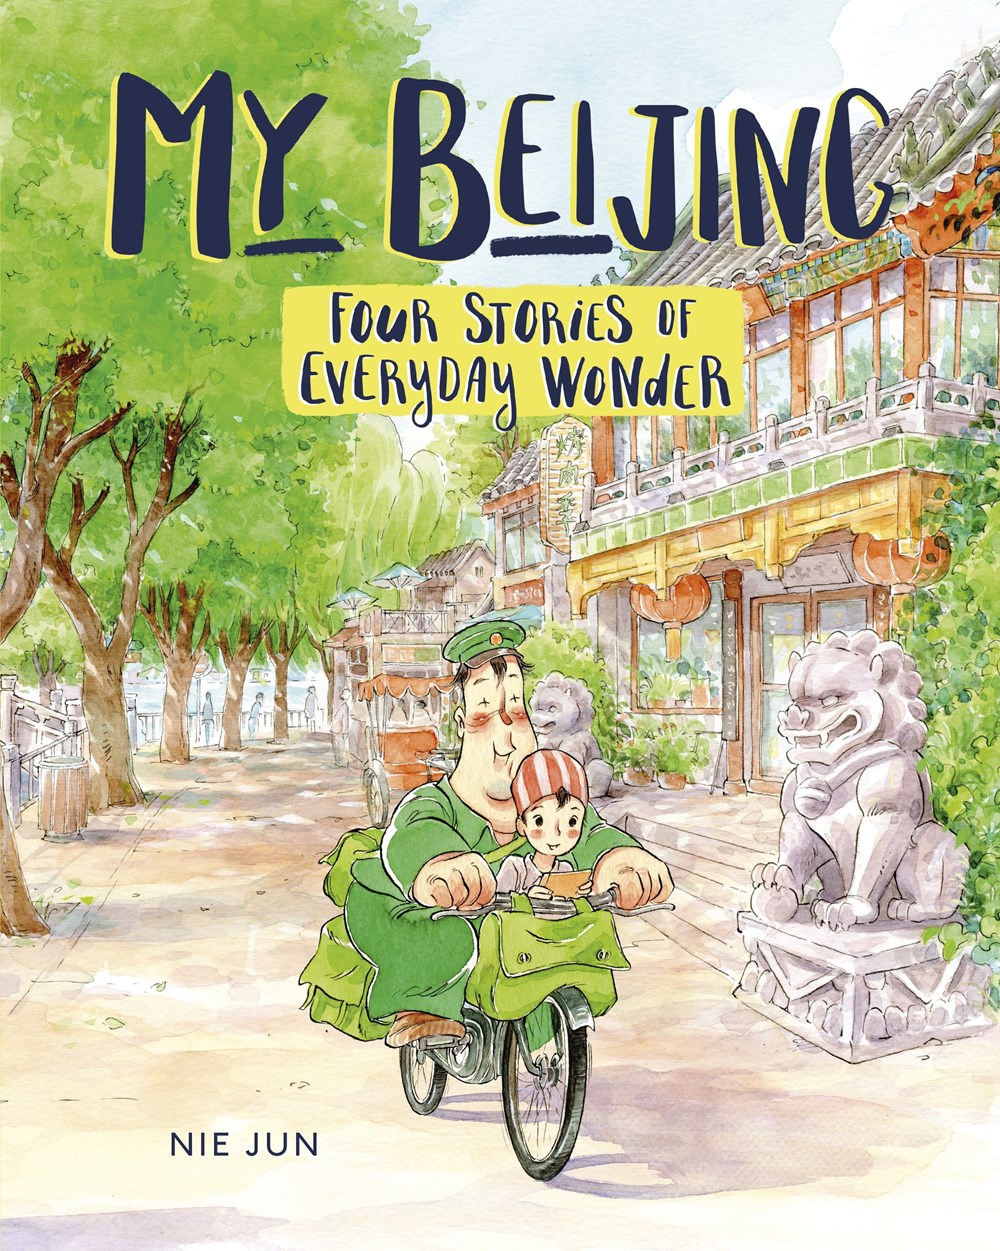 Review: My Beijing: Four Stories of Everyday Wonder by Nie Jun